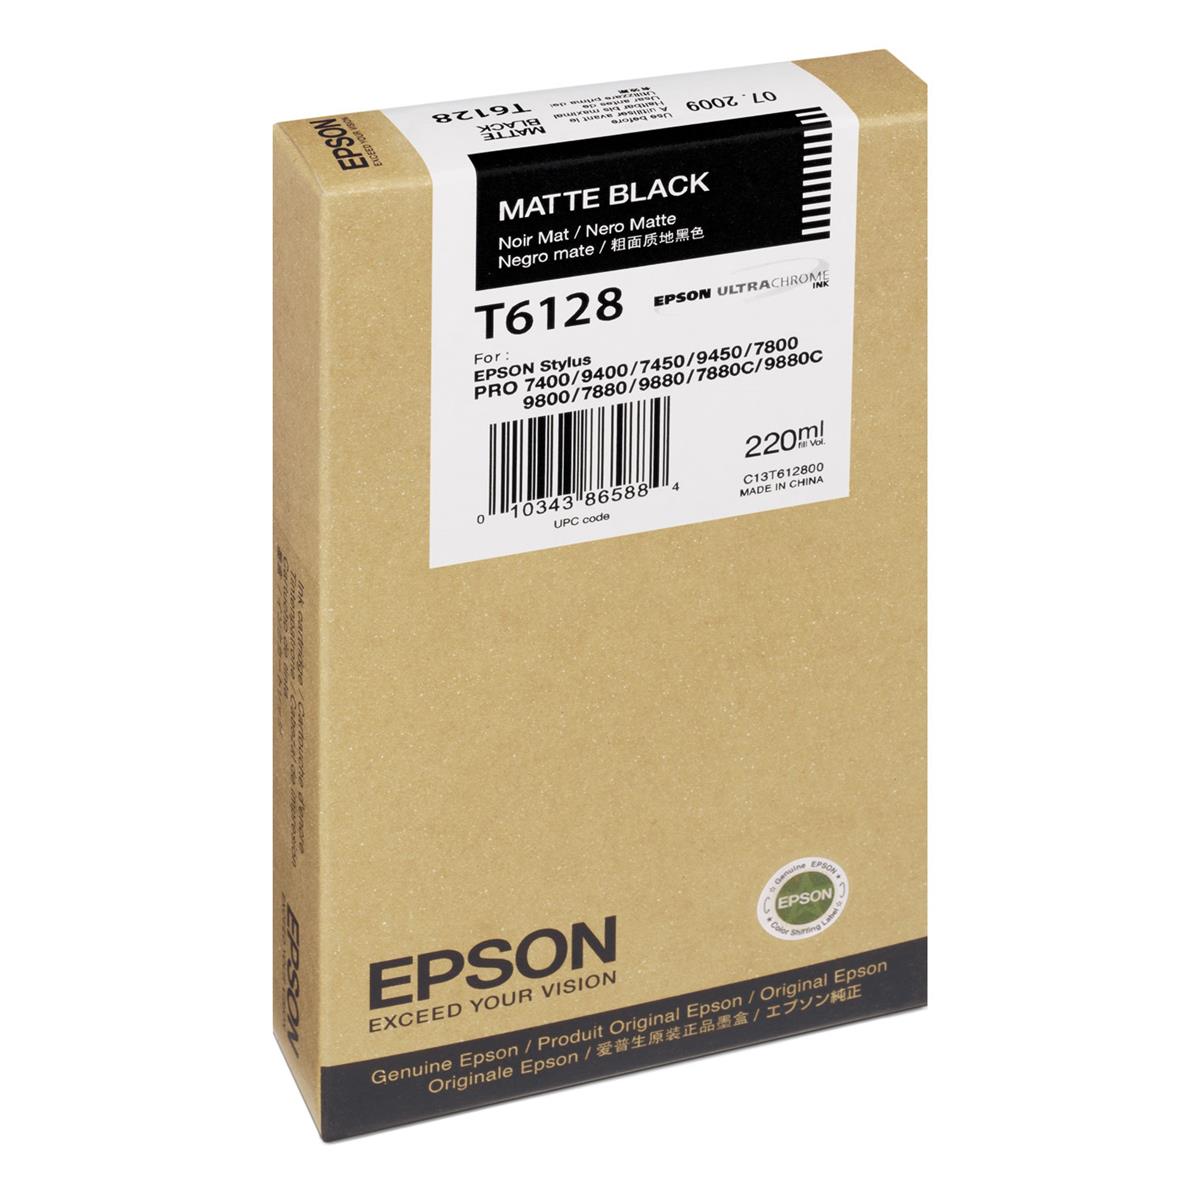 Image of Epson T603100 UltraChrome 220ml Printer Ink